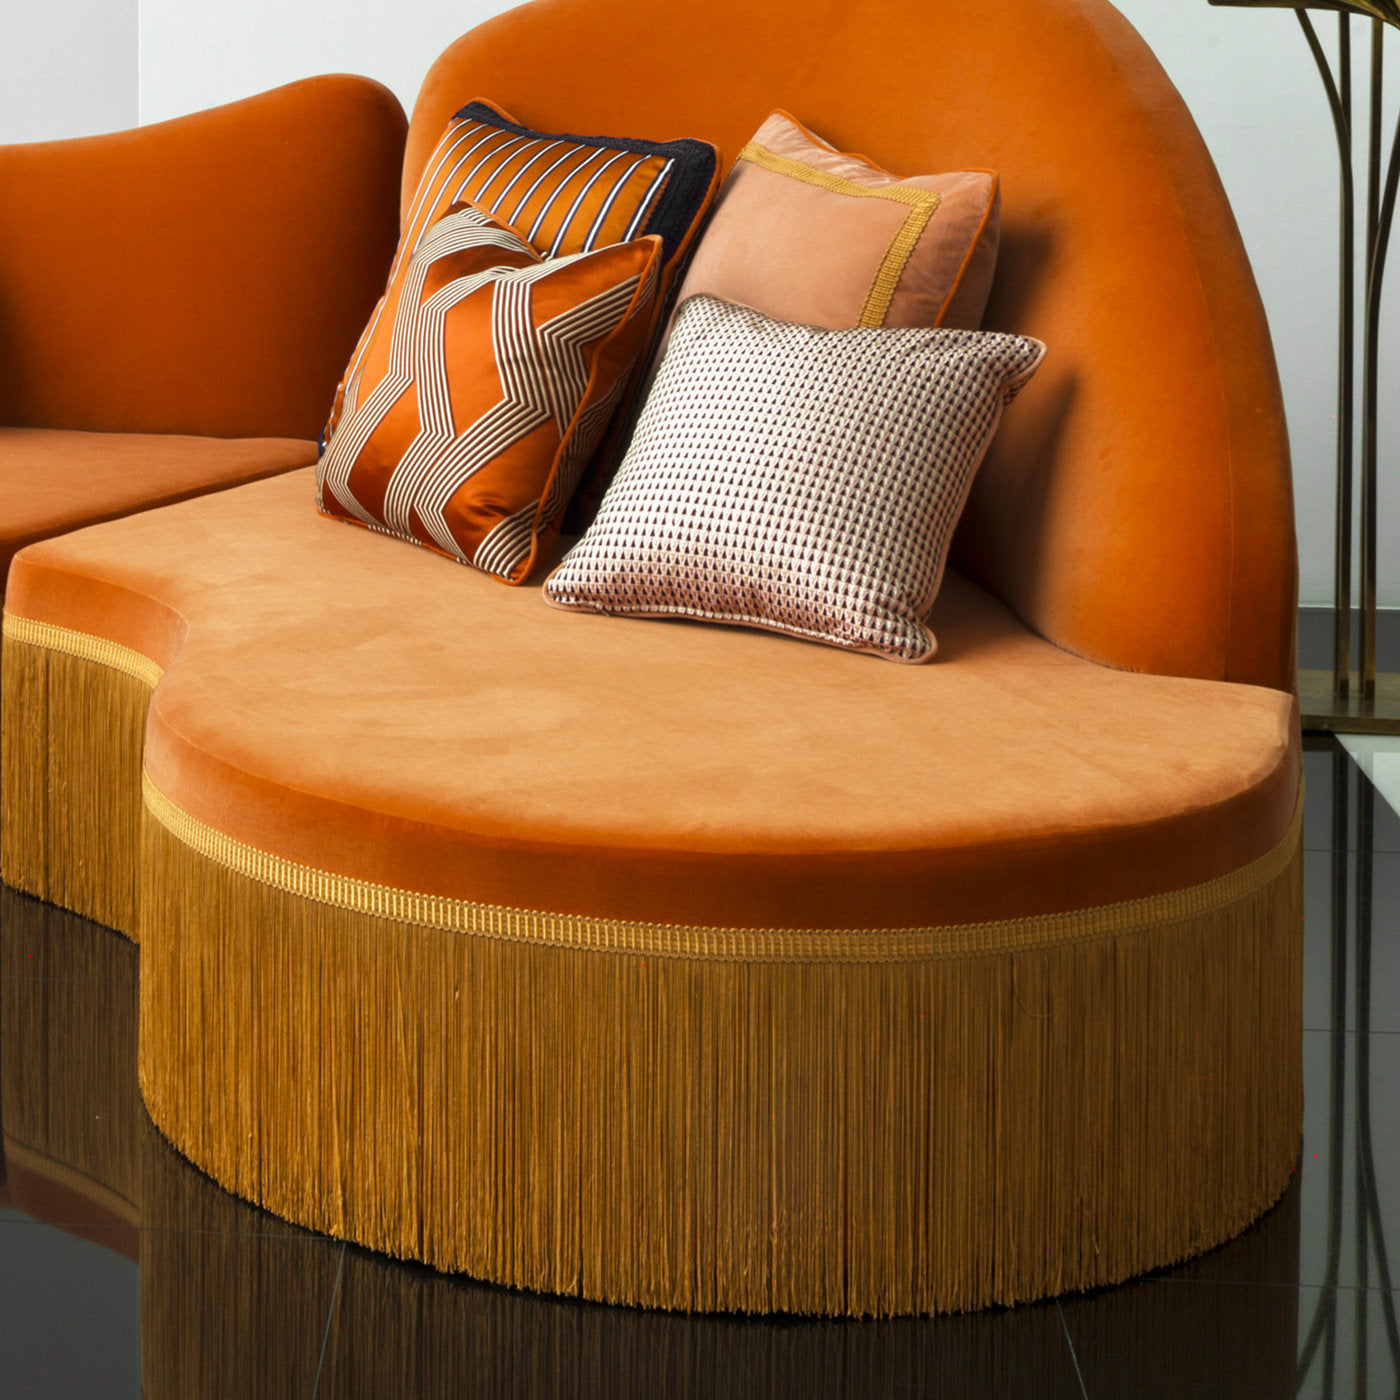 Wave Orange 3-Piece Sectional Sofa #2 - Alternative view 2